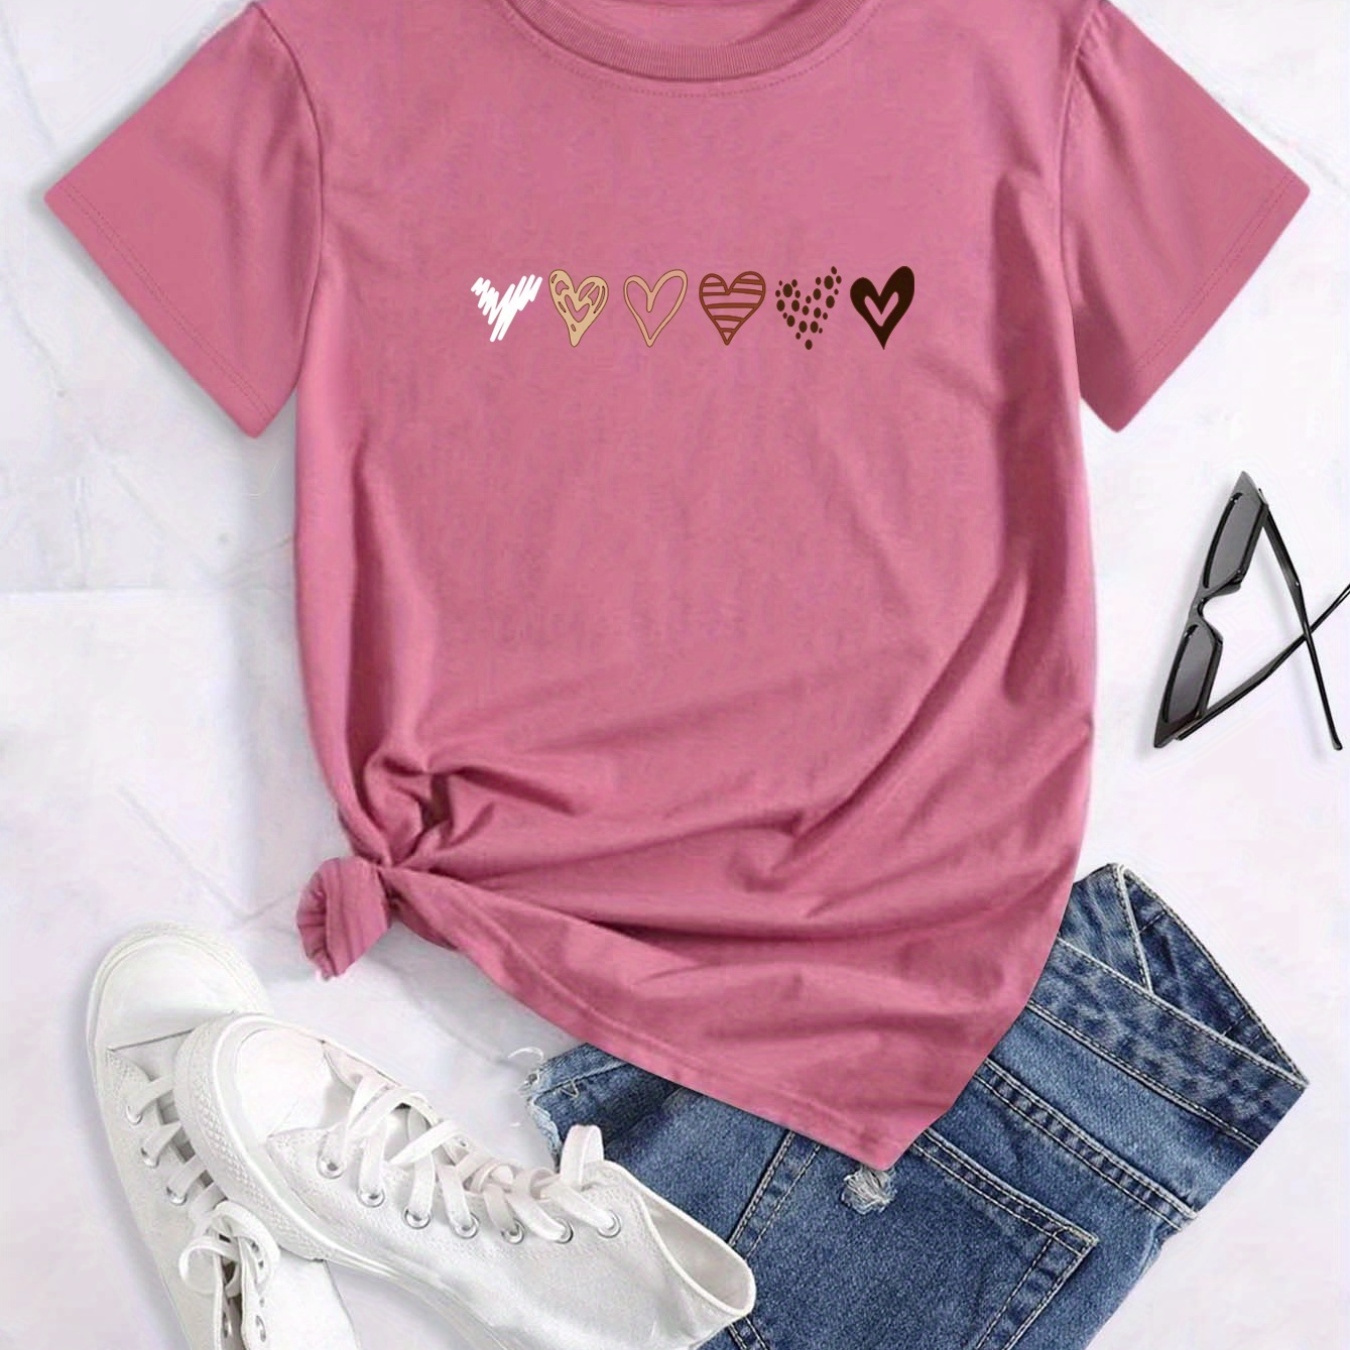 

Heart Print Crew Neck T-shirt, Casual Short Sleeve T-shirt For Spring & Summer, Women's Clothing